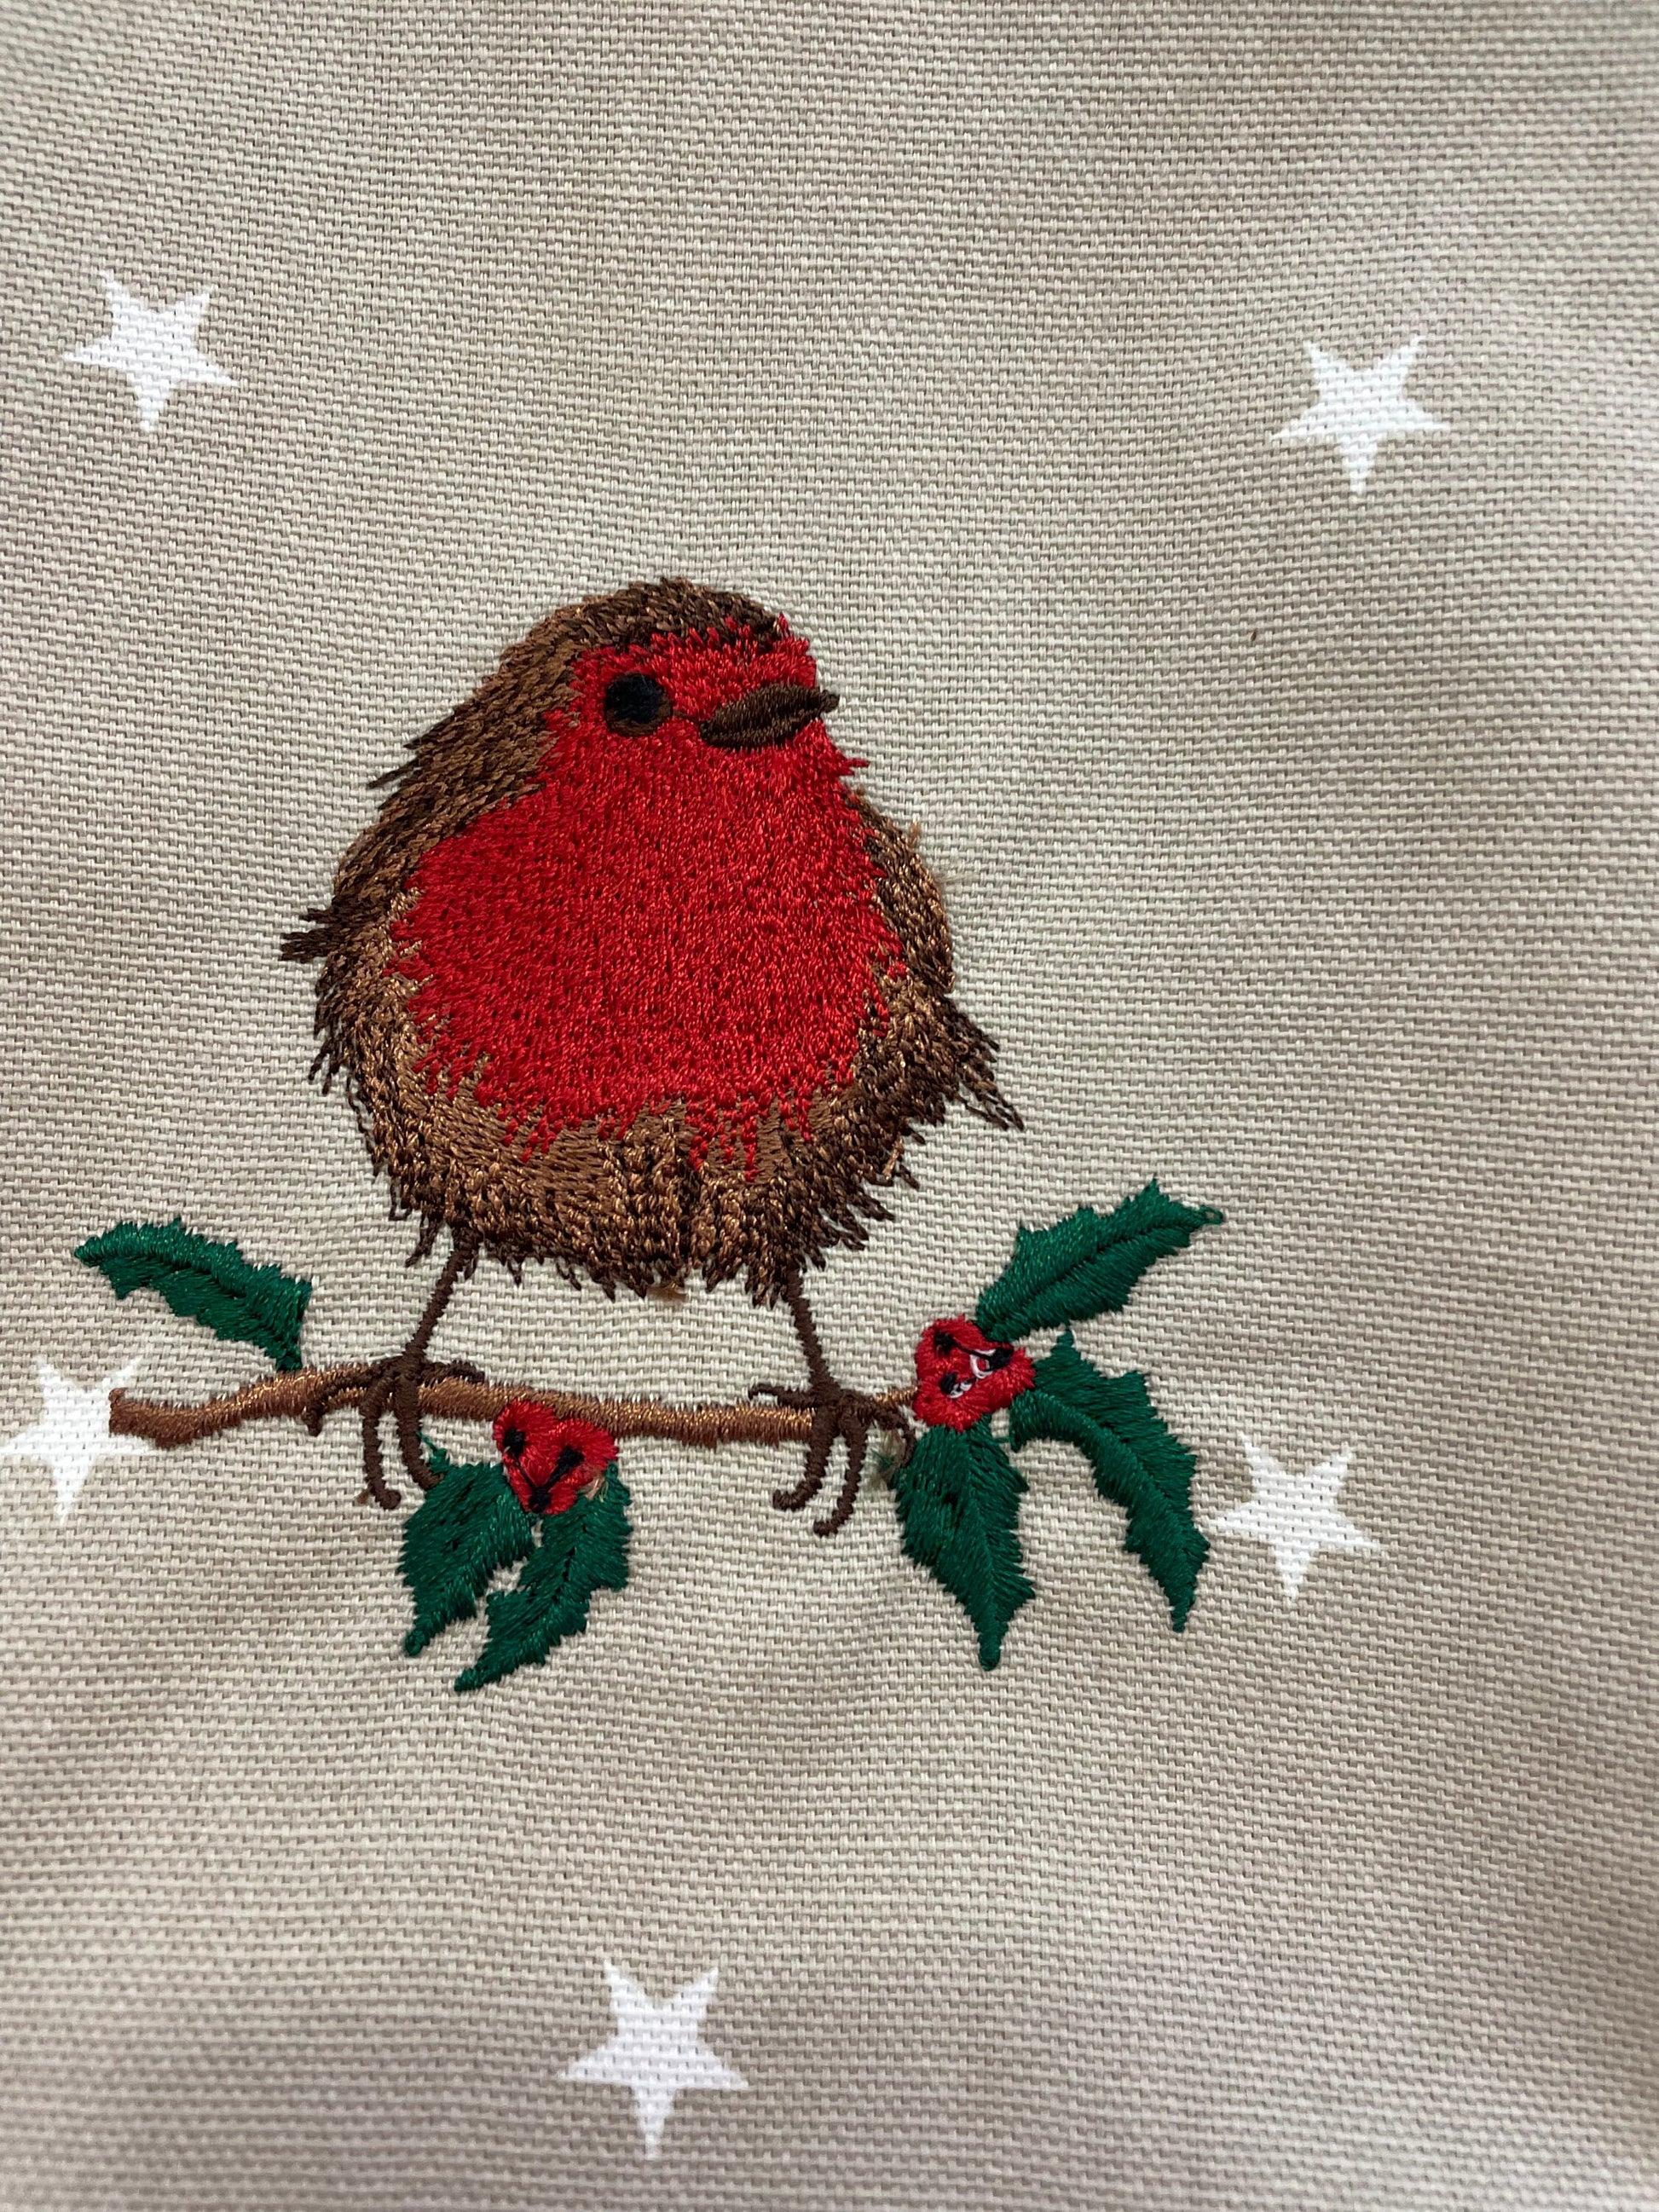 Festive Robin Christmas Napkins- Christmas fabric Taupe Star Fabric napkin.